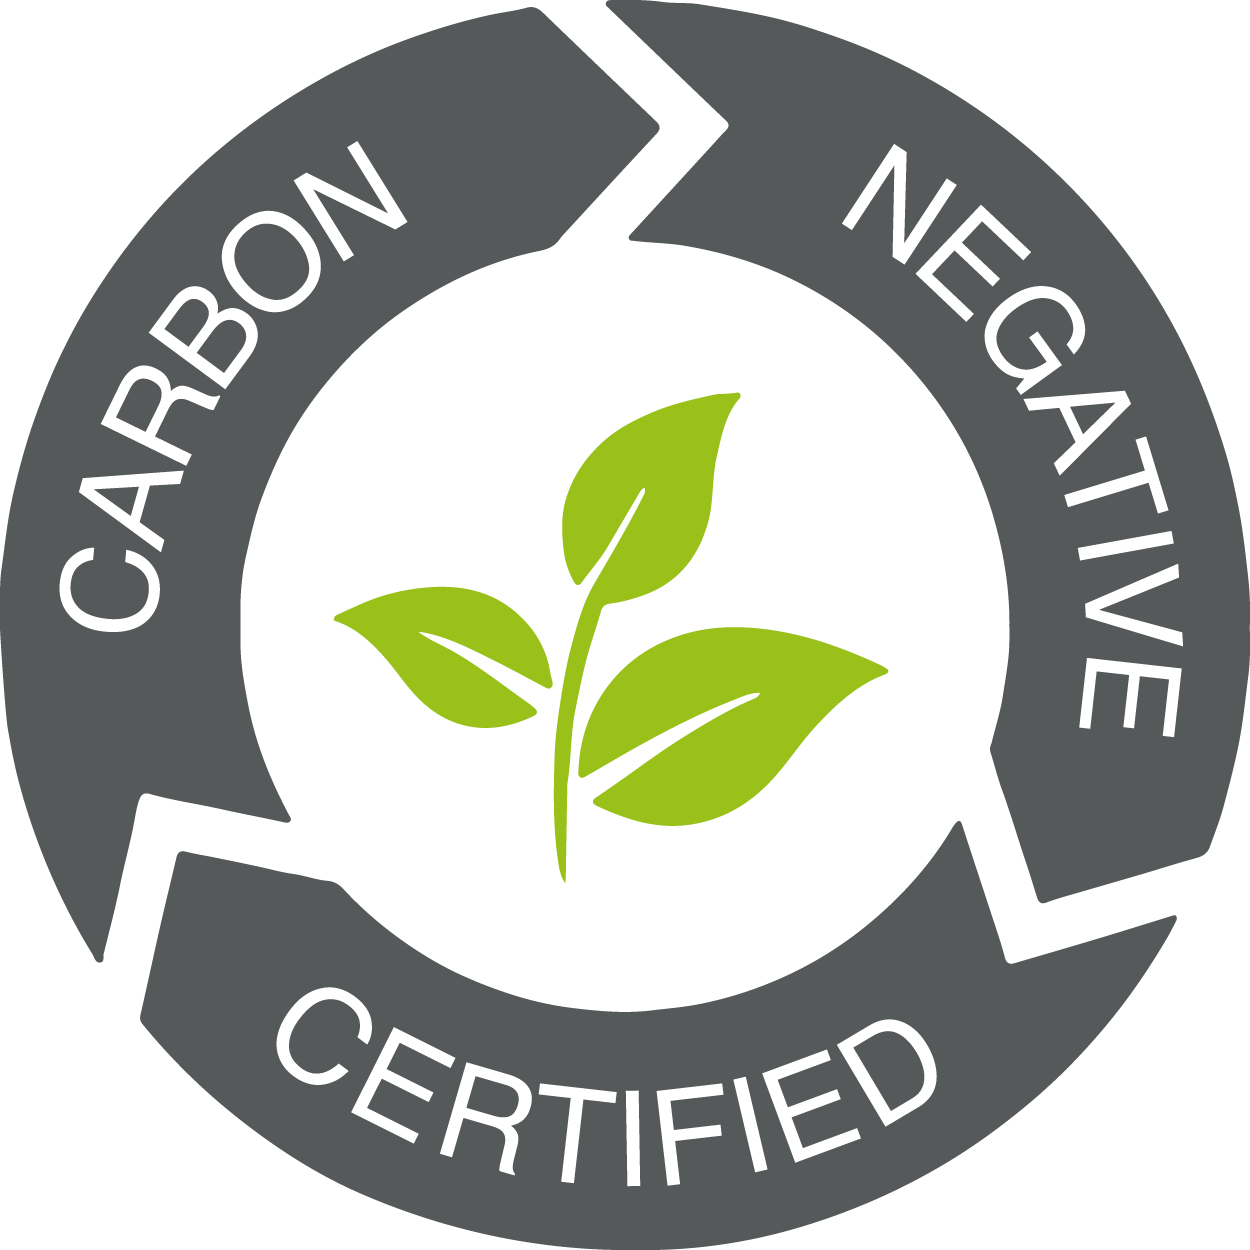 Carbon Negative Certified logo with green leaf symbol.